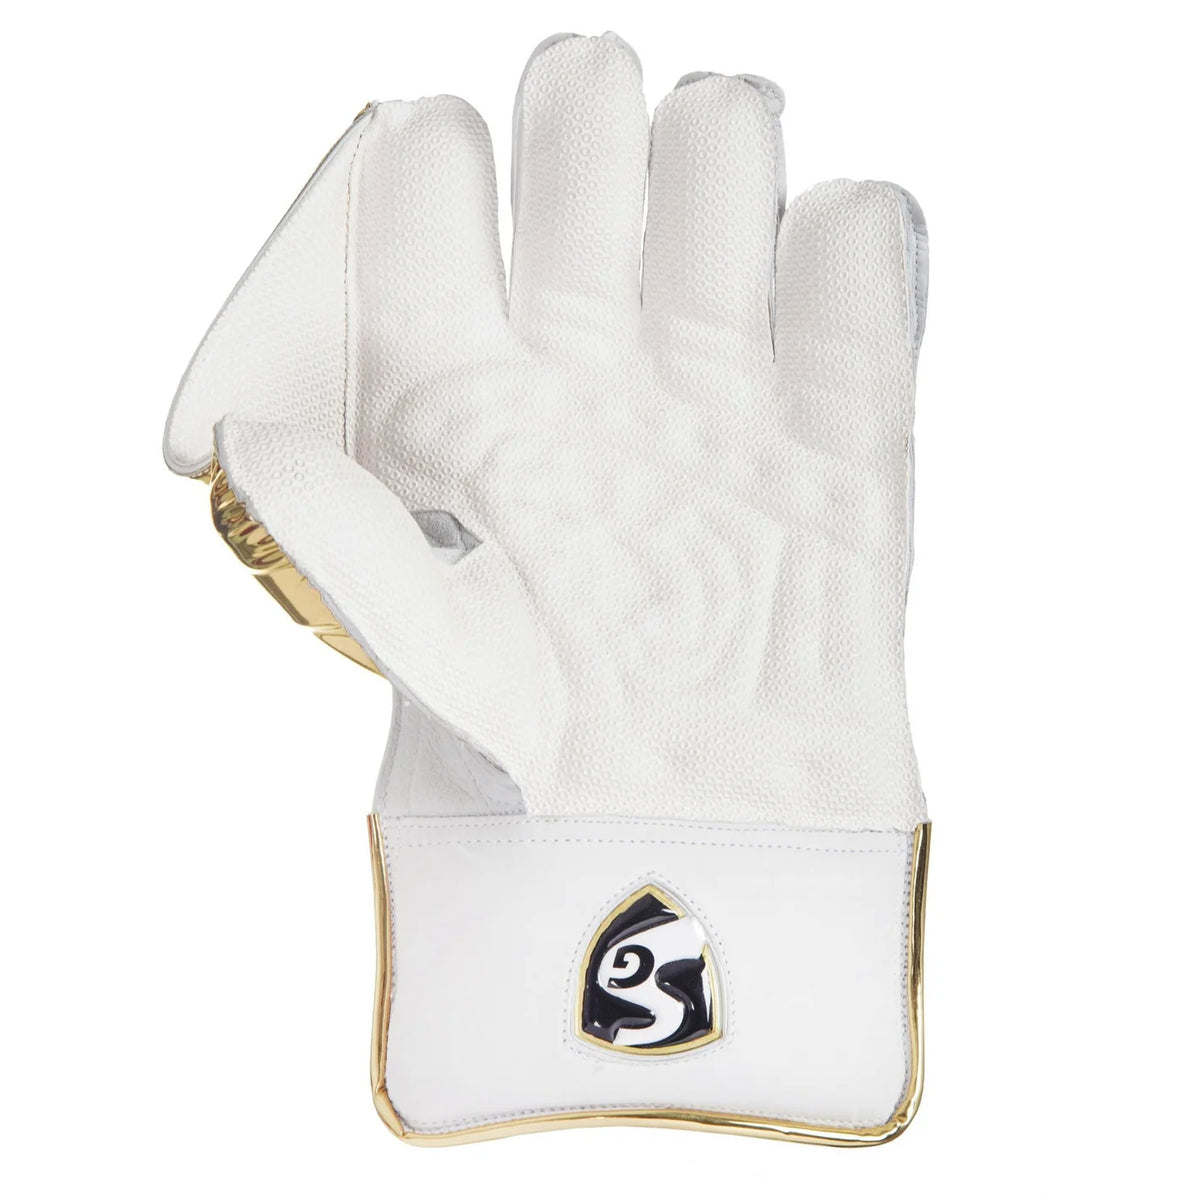 Pre-Order SG Hilite Wicket Keeping Gloves (Multi-Color) W.K. Gloves